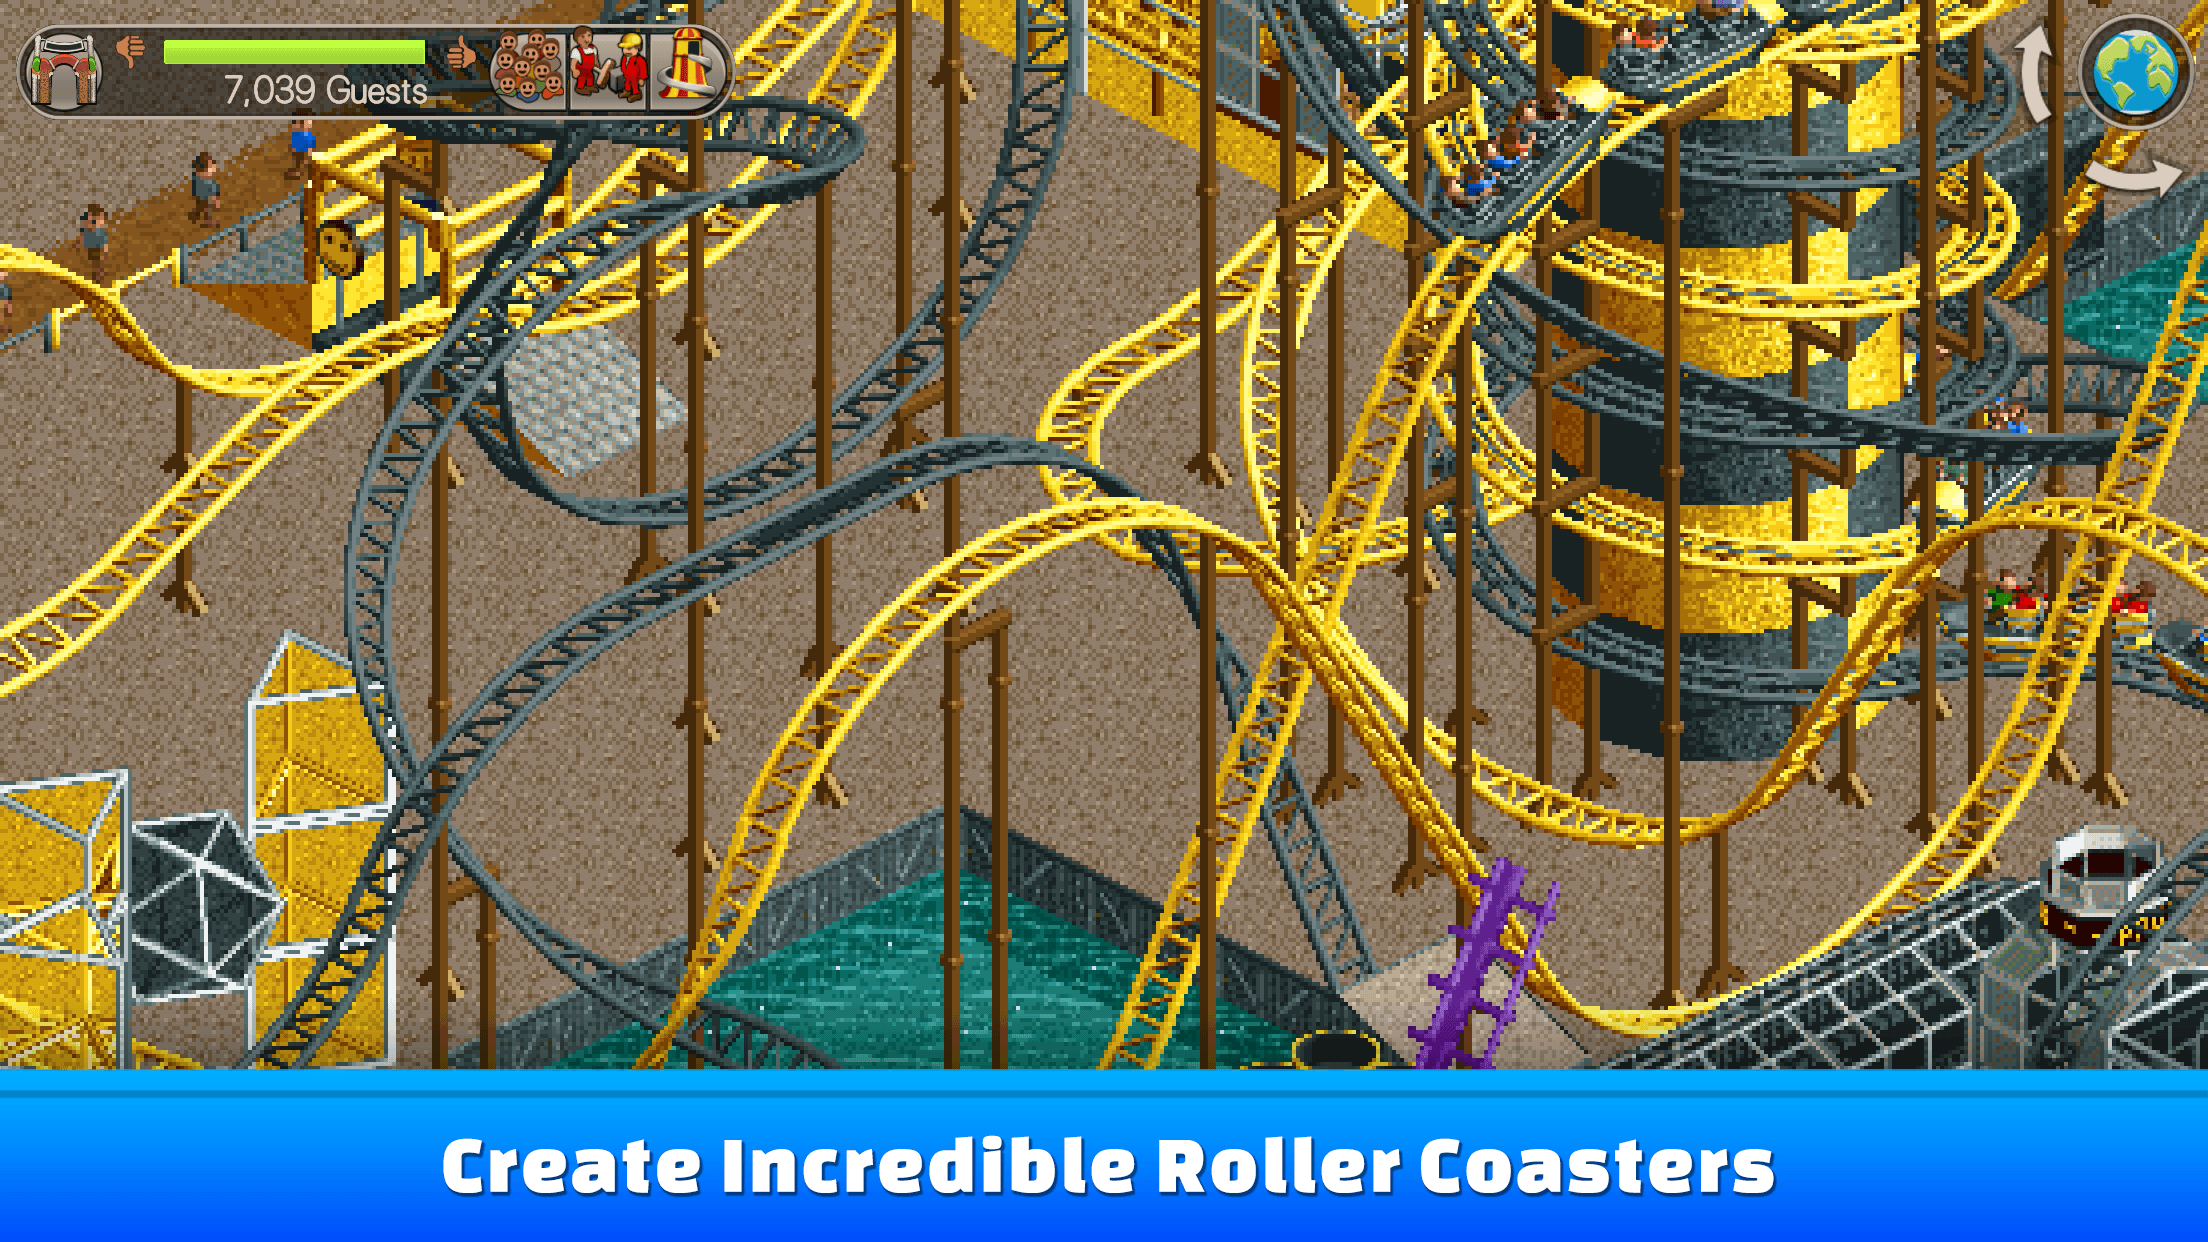 roller coaster tycoon emulator for mac